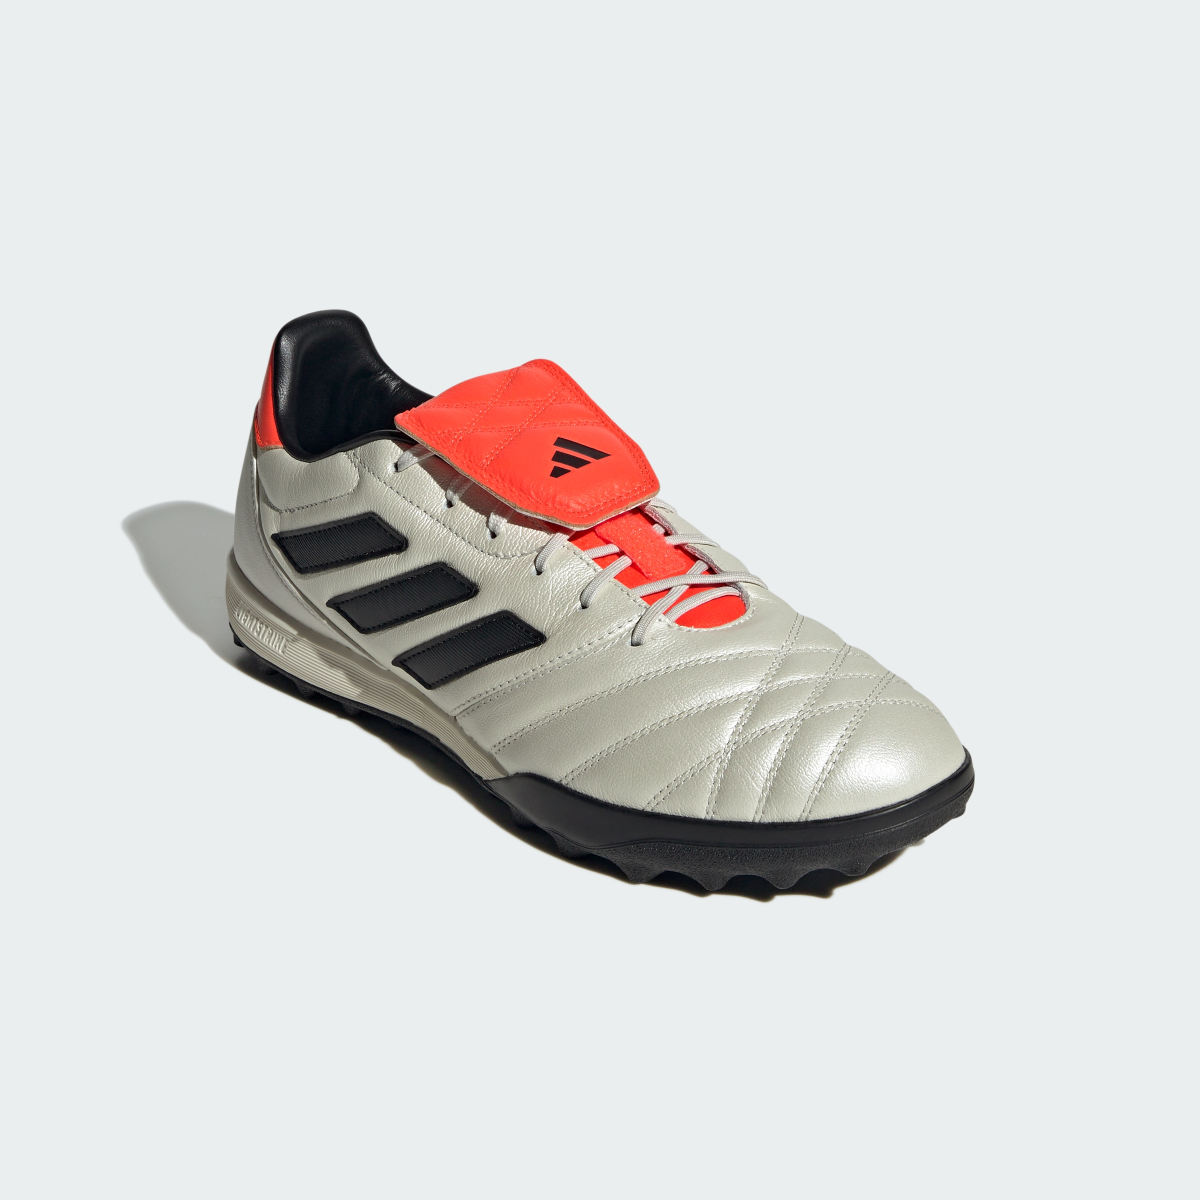 Adidas Copa Gloro Turf Boots. 5